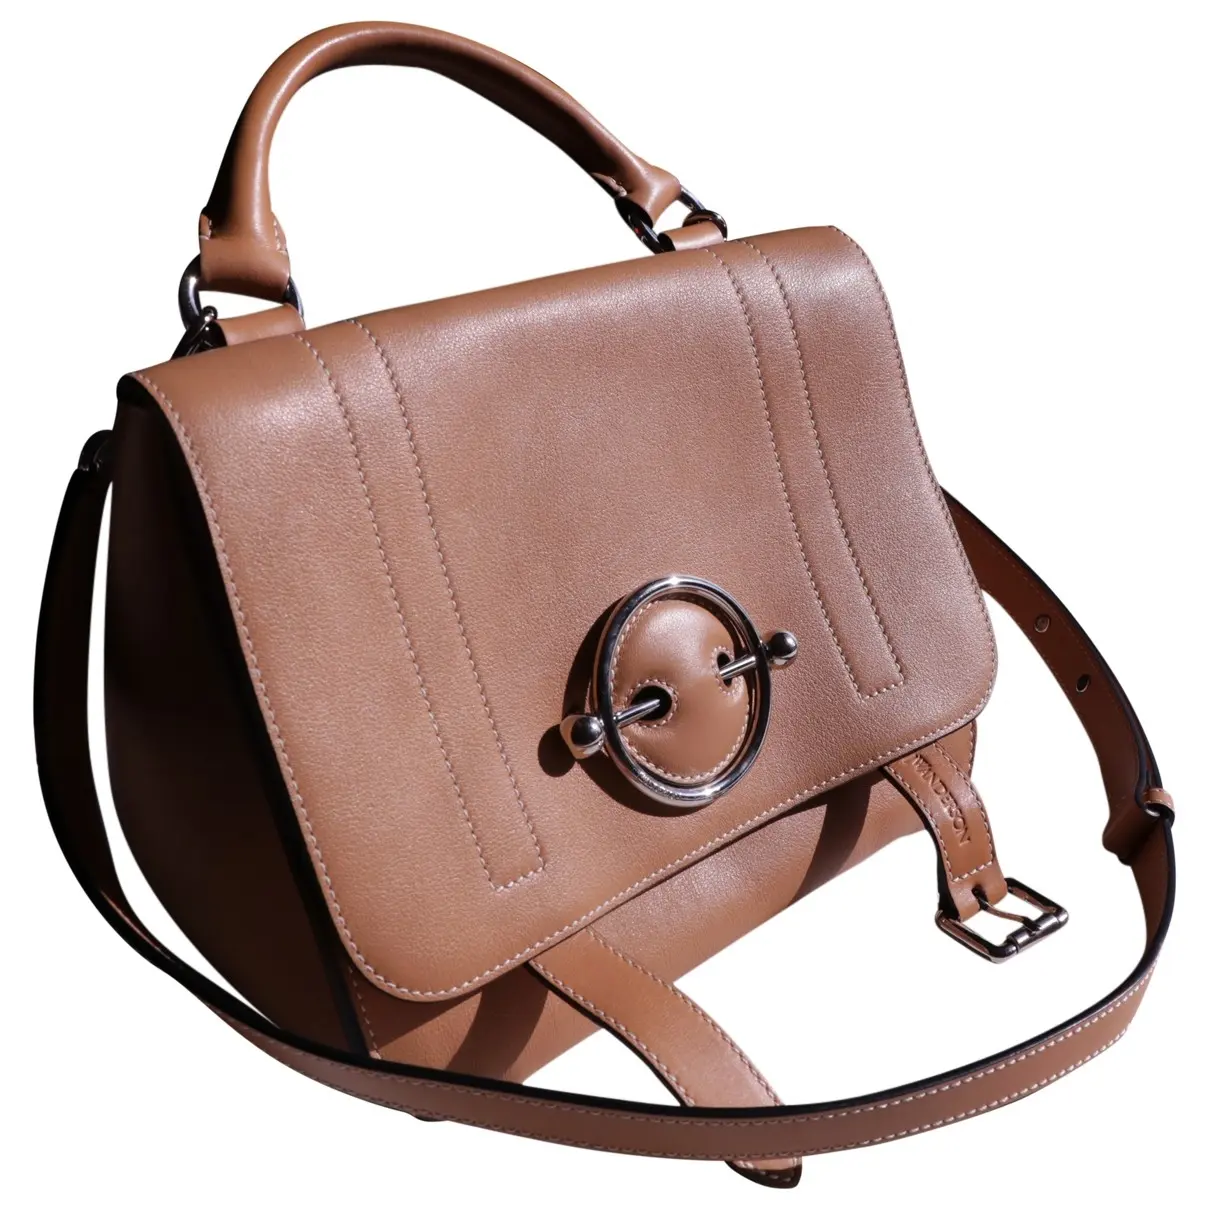 JW Anderson Disc leather handbag for sale